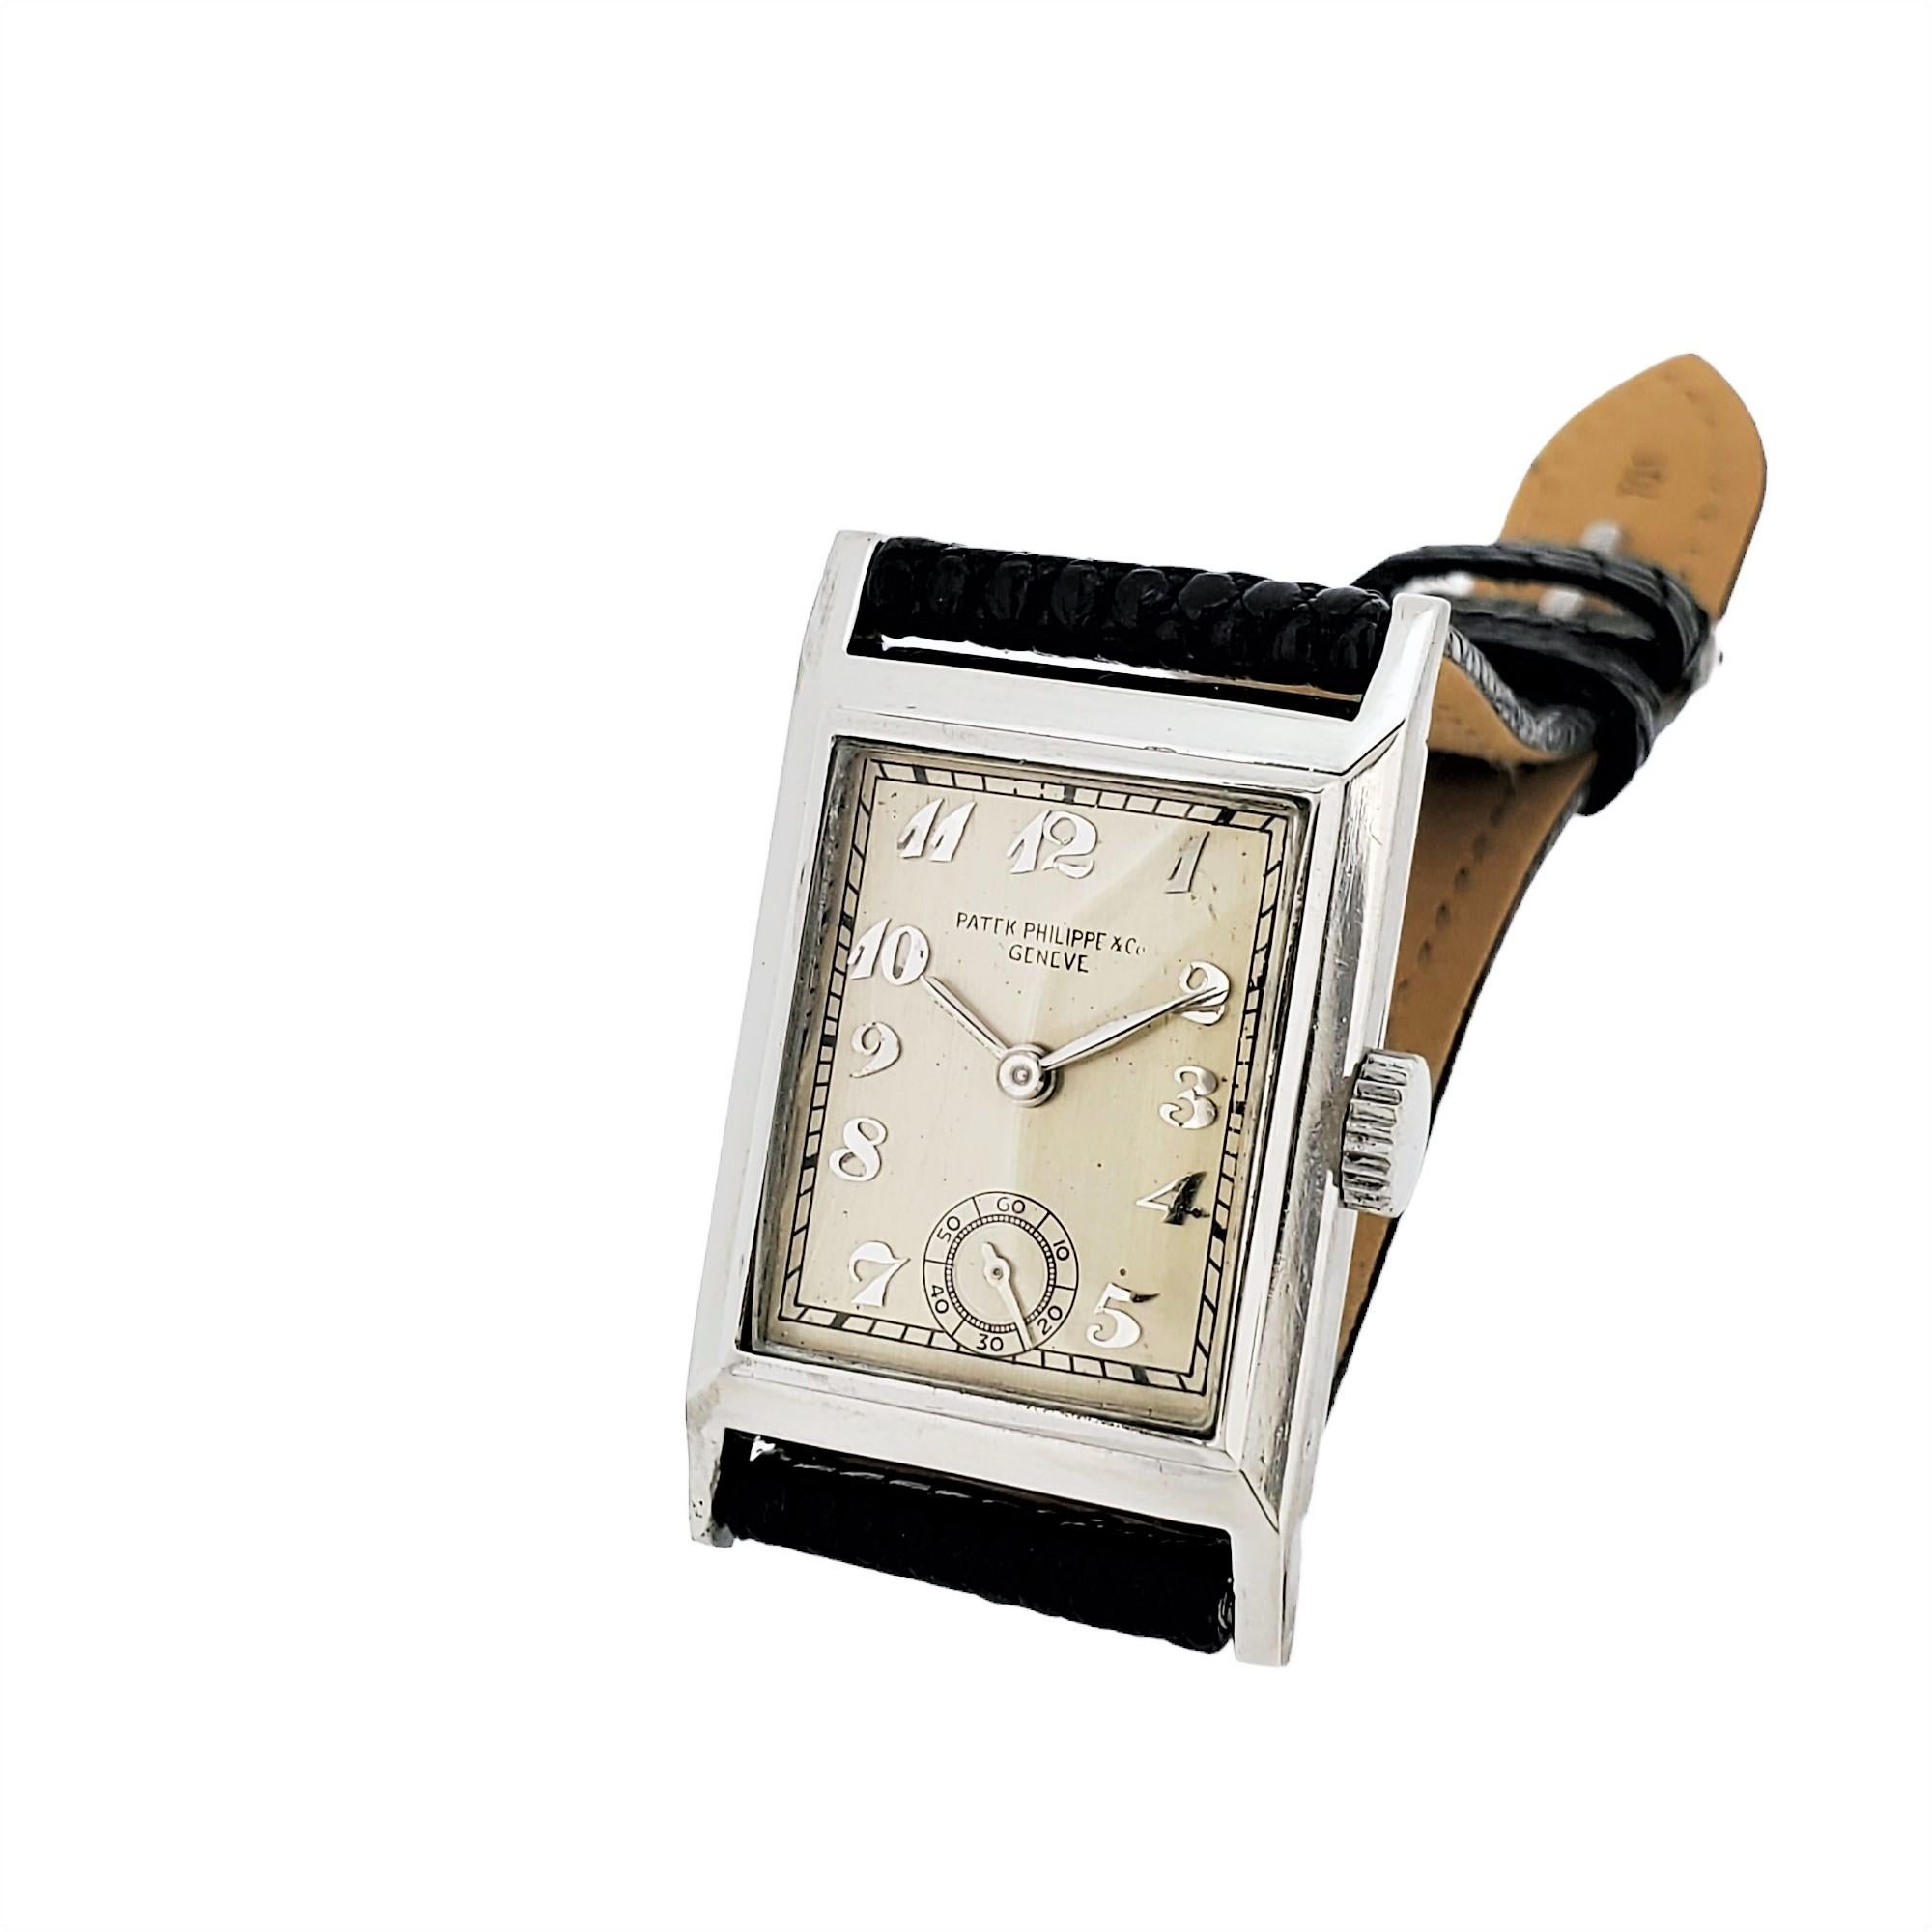 1930 patek philippe watch